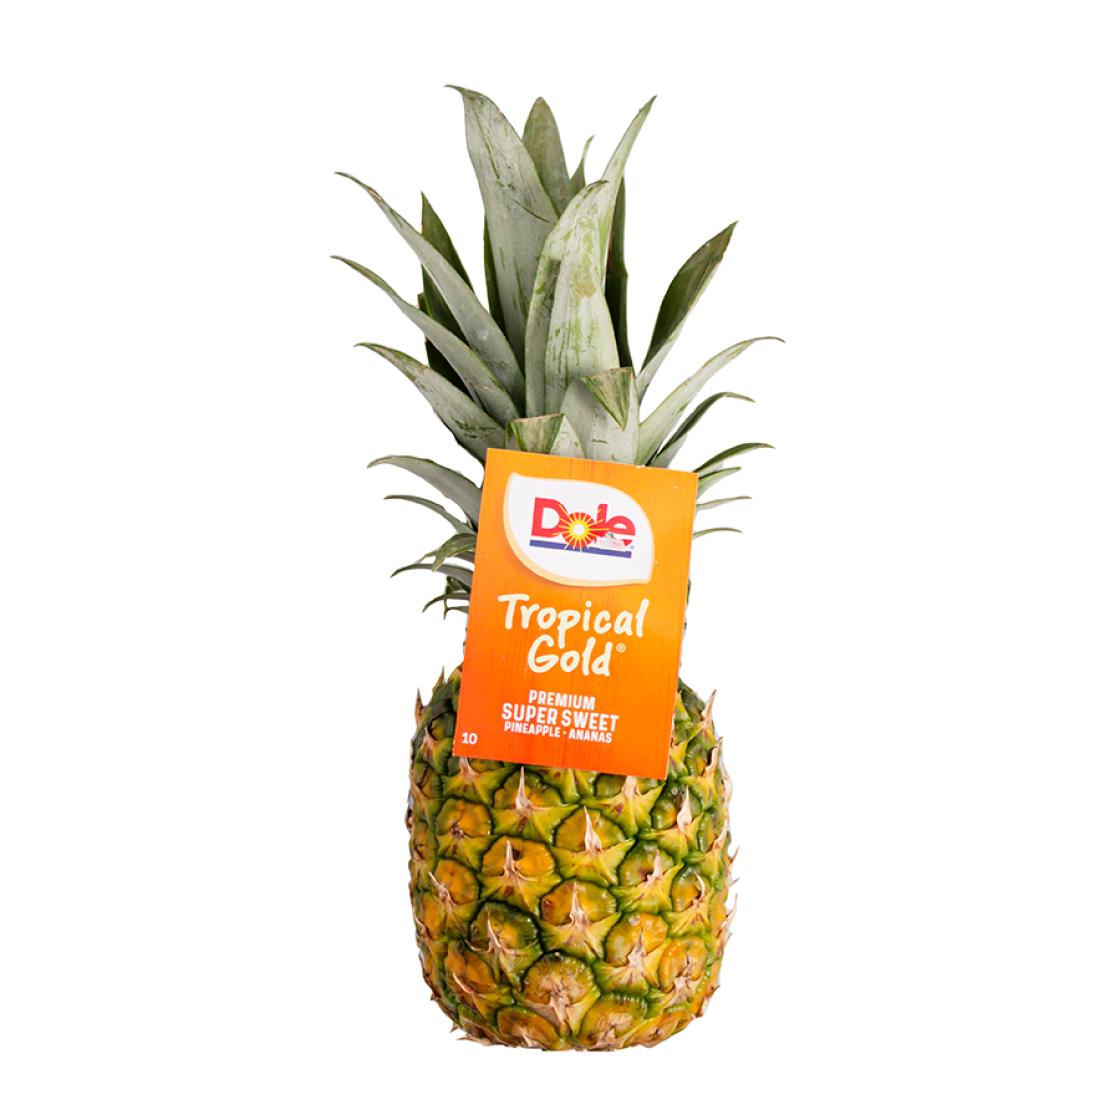 Dole ananas 900x900